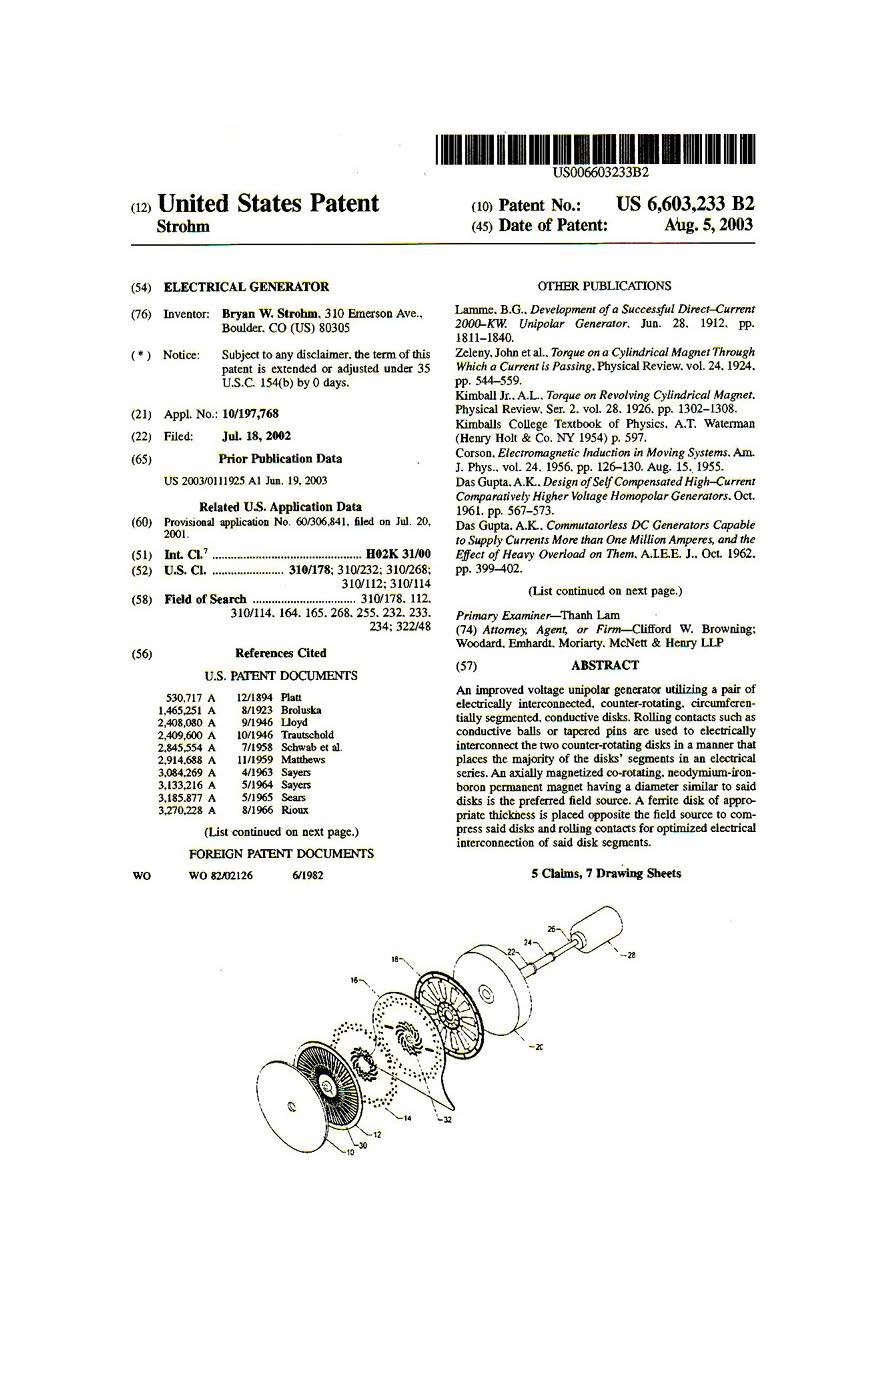 Bryan Strohm’s 2003 Patent Magvortechs DC Generators Designs